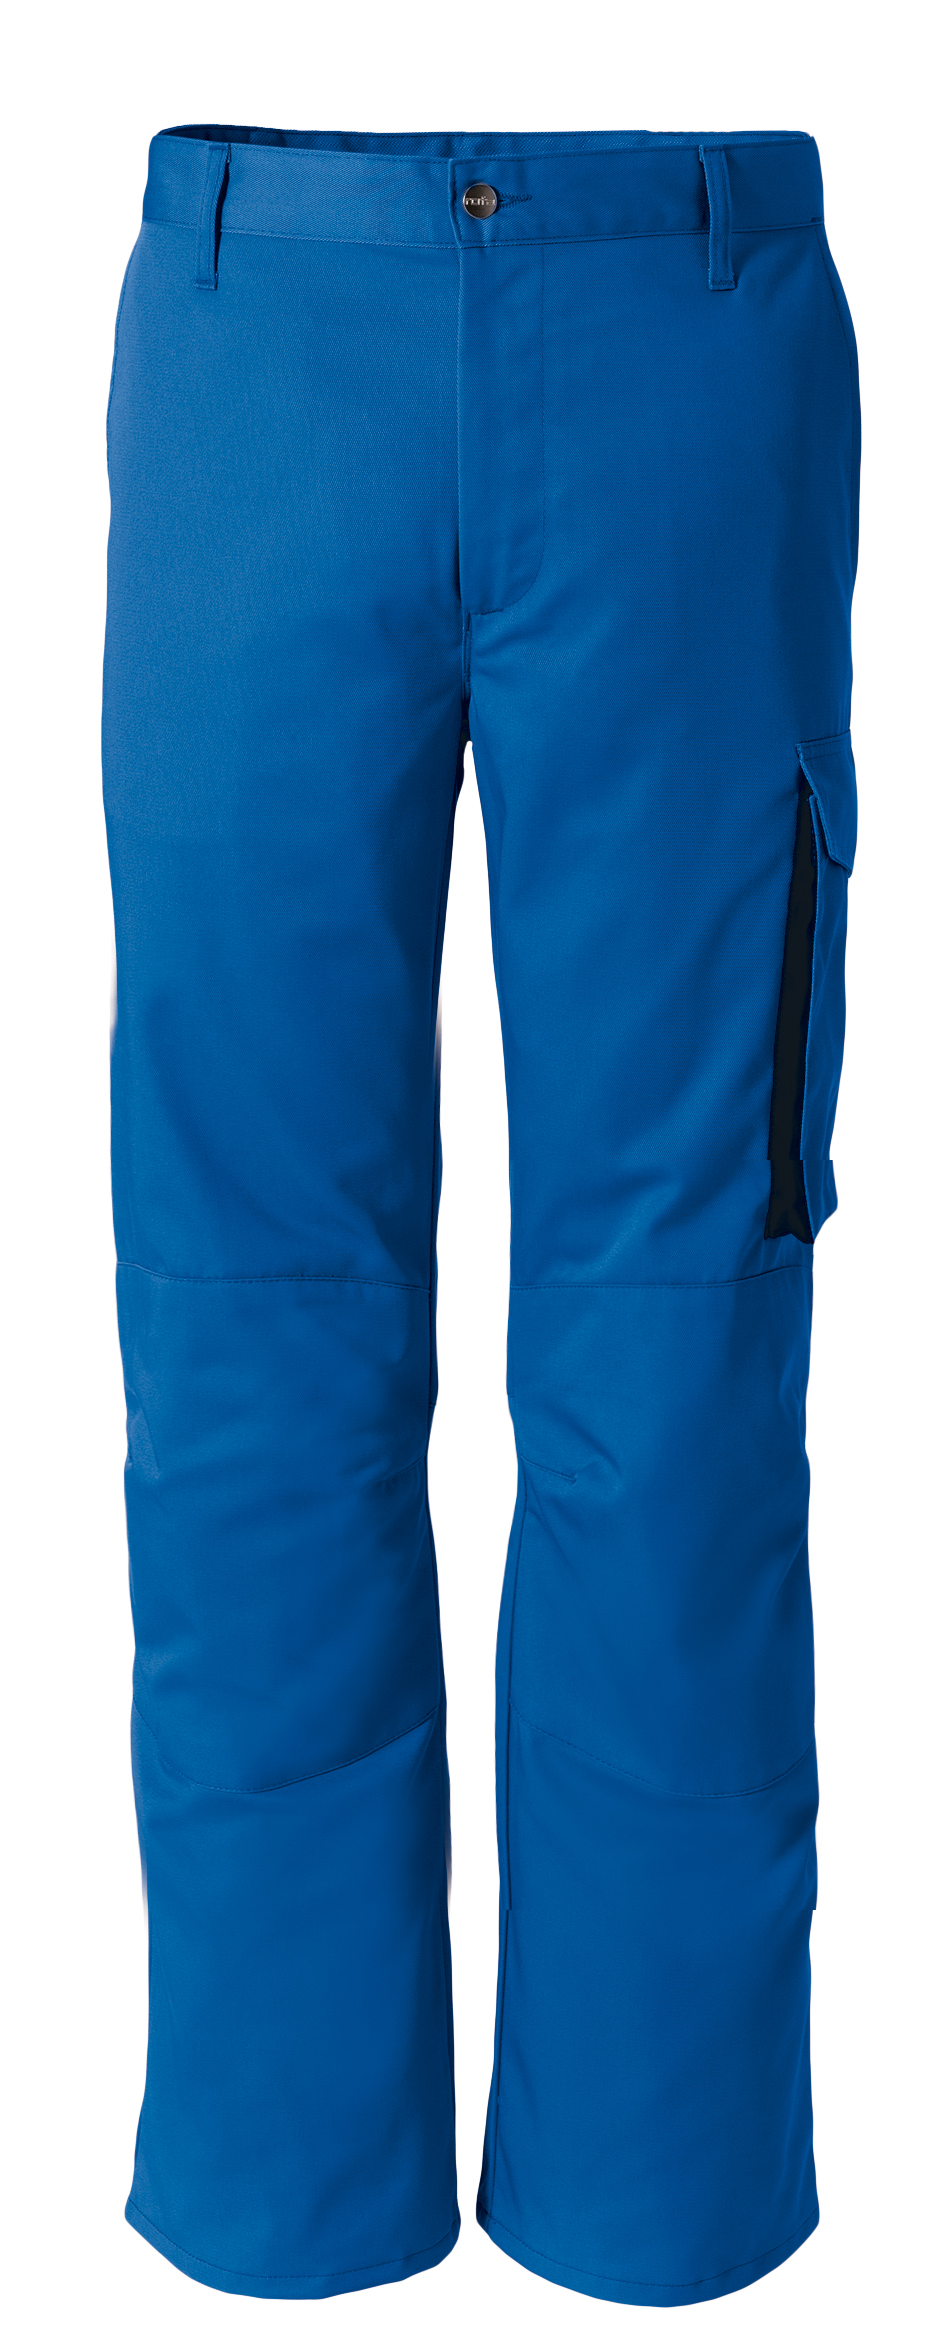 ROFA Bundhose Arbeitshose Berufshose Workerhose Arbeitskleidung Berufskleidung Move kornblau ca 295 g